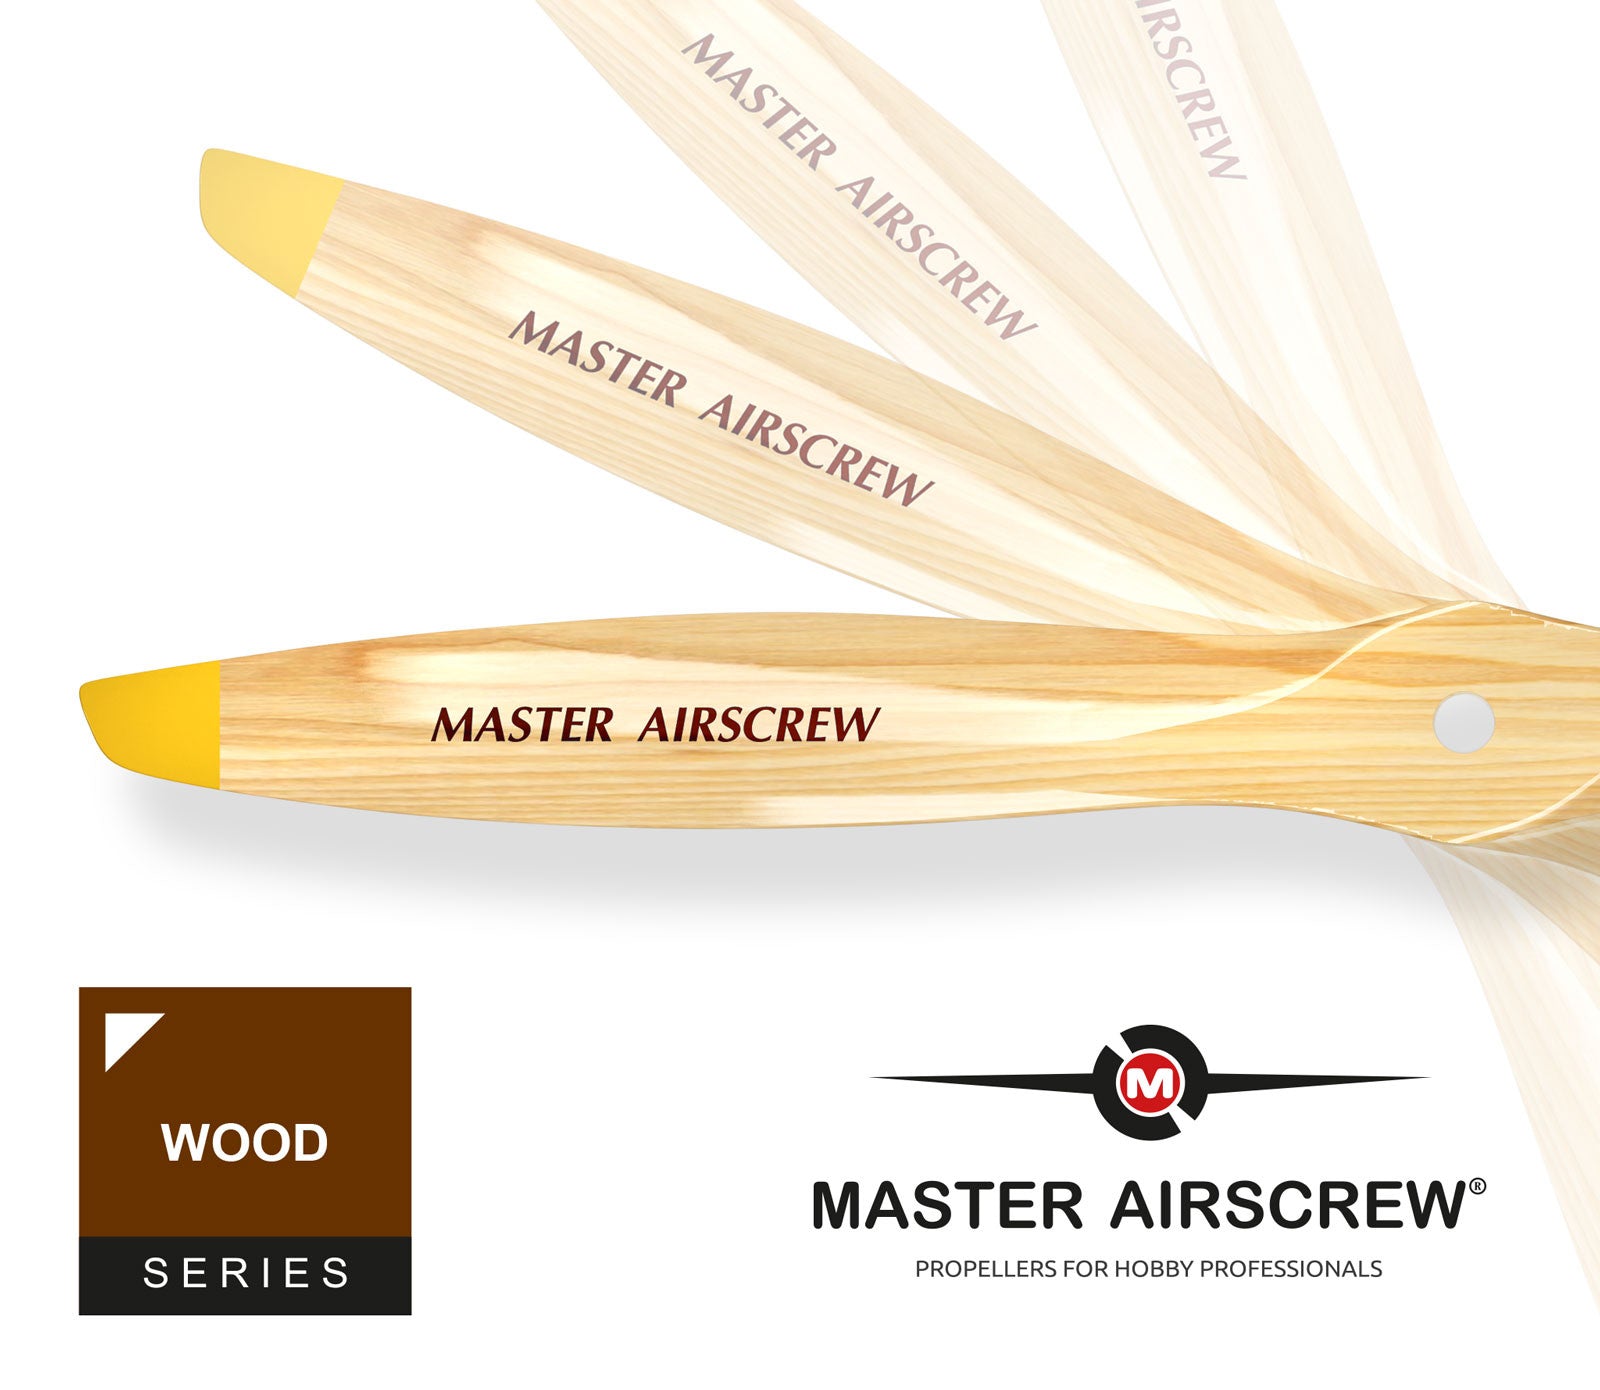 Wood-Maple - 18x10 Propeller - Master Airscrew